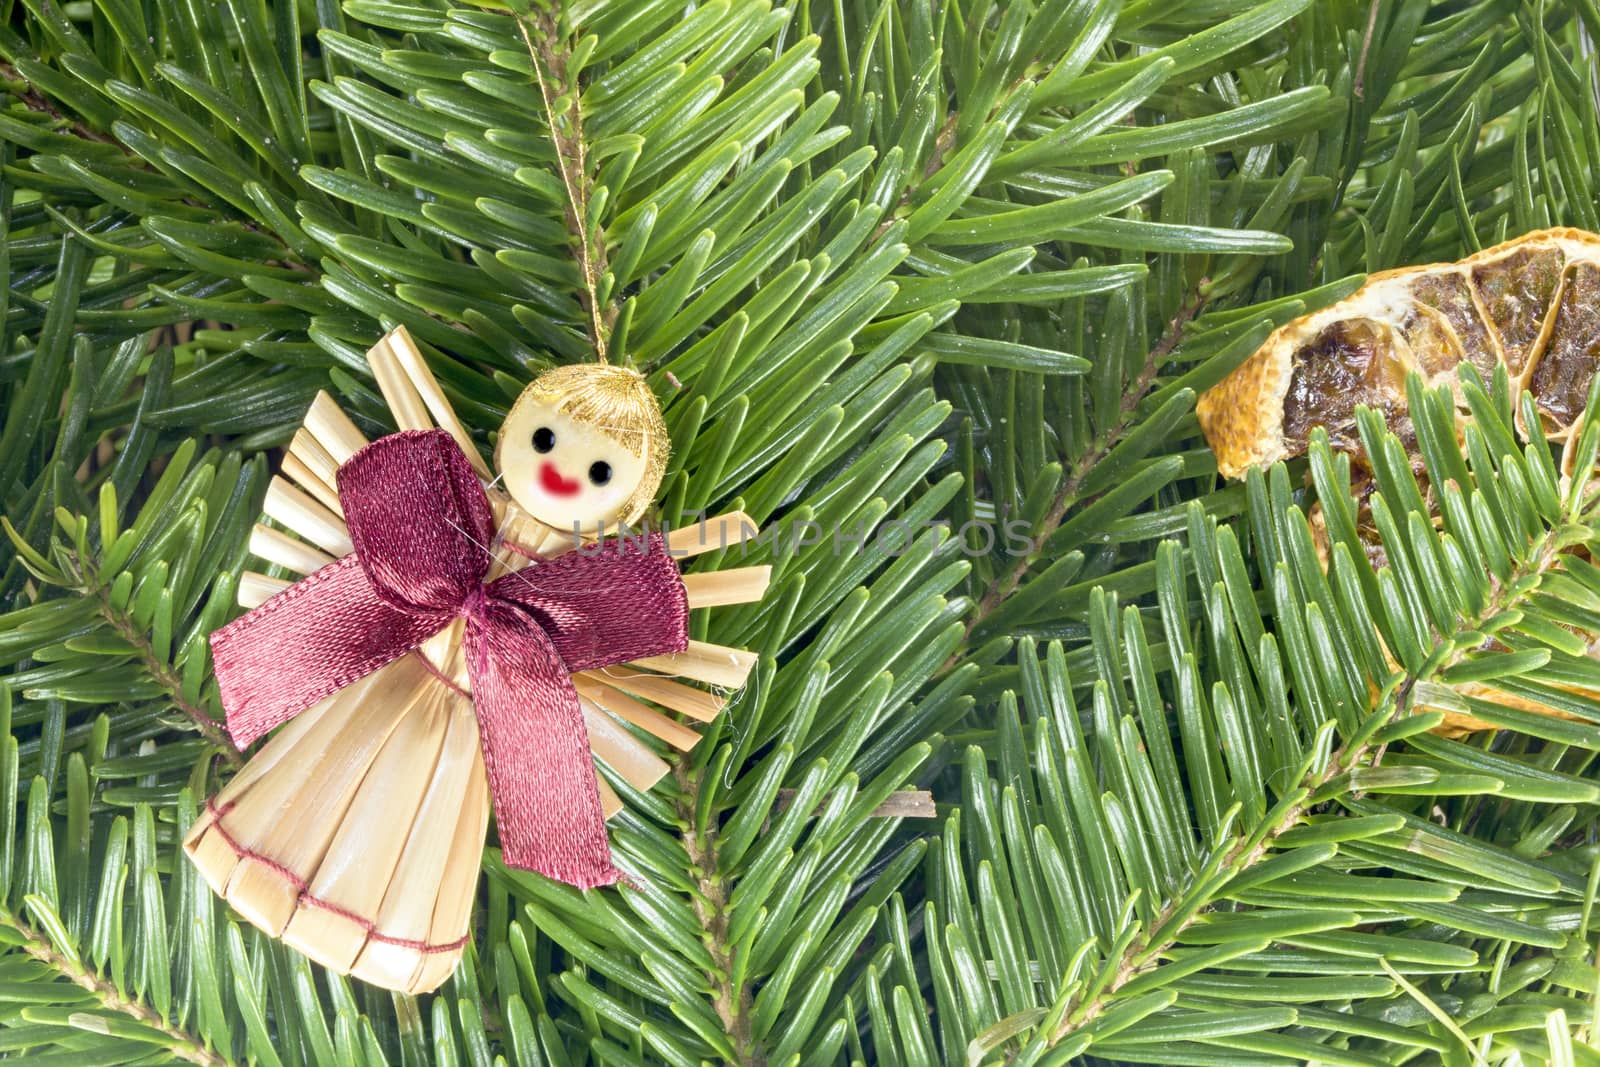 Straw Christmas ornaments by Dermot68